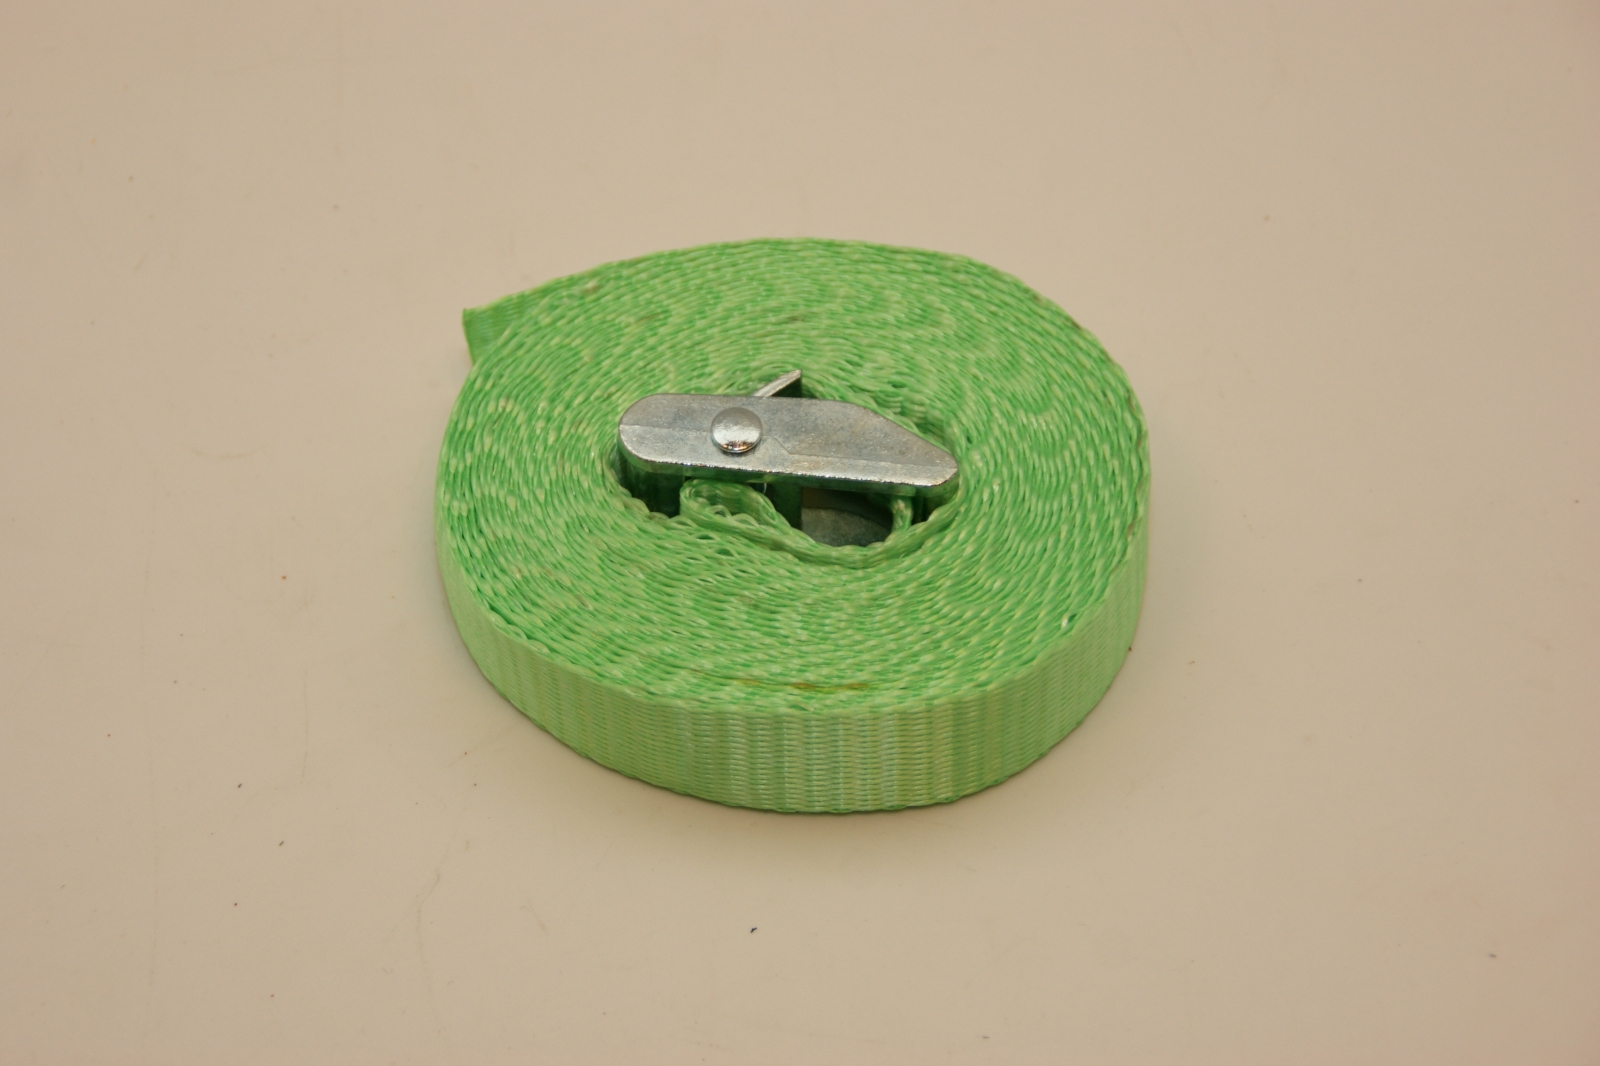 Sjorband: Bagagegordel groen, 25mm 5m, 500 daN